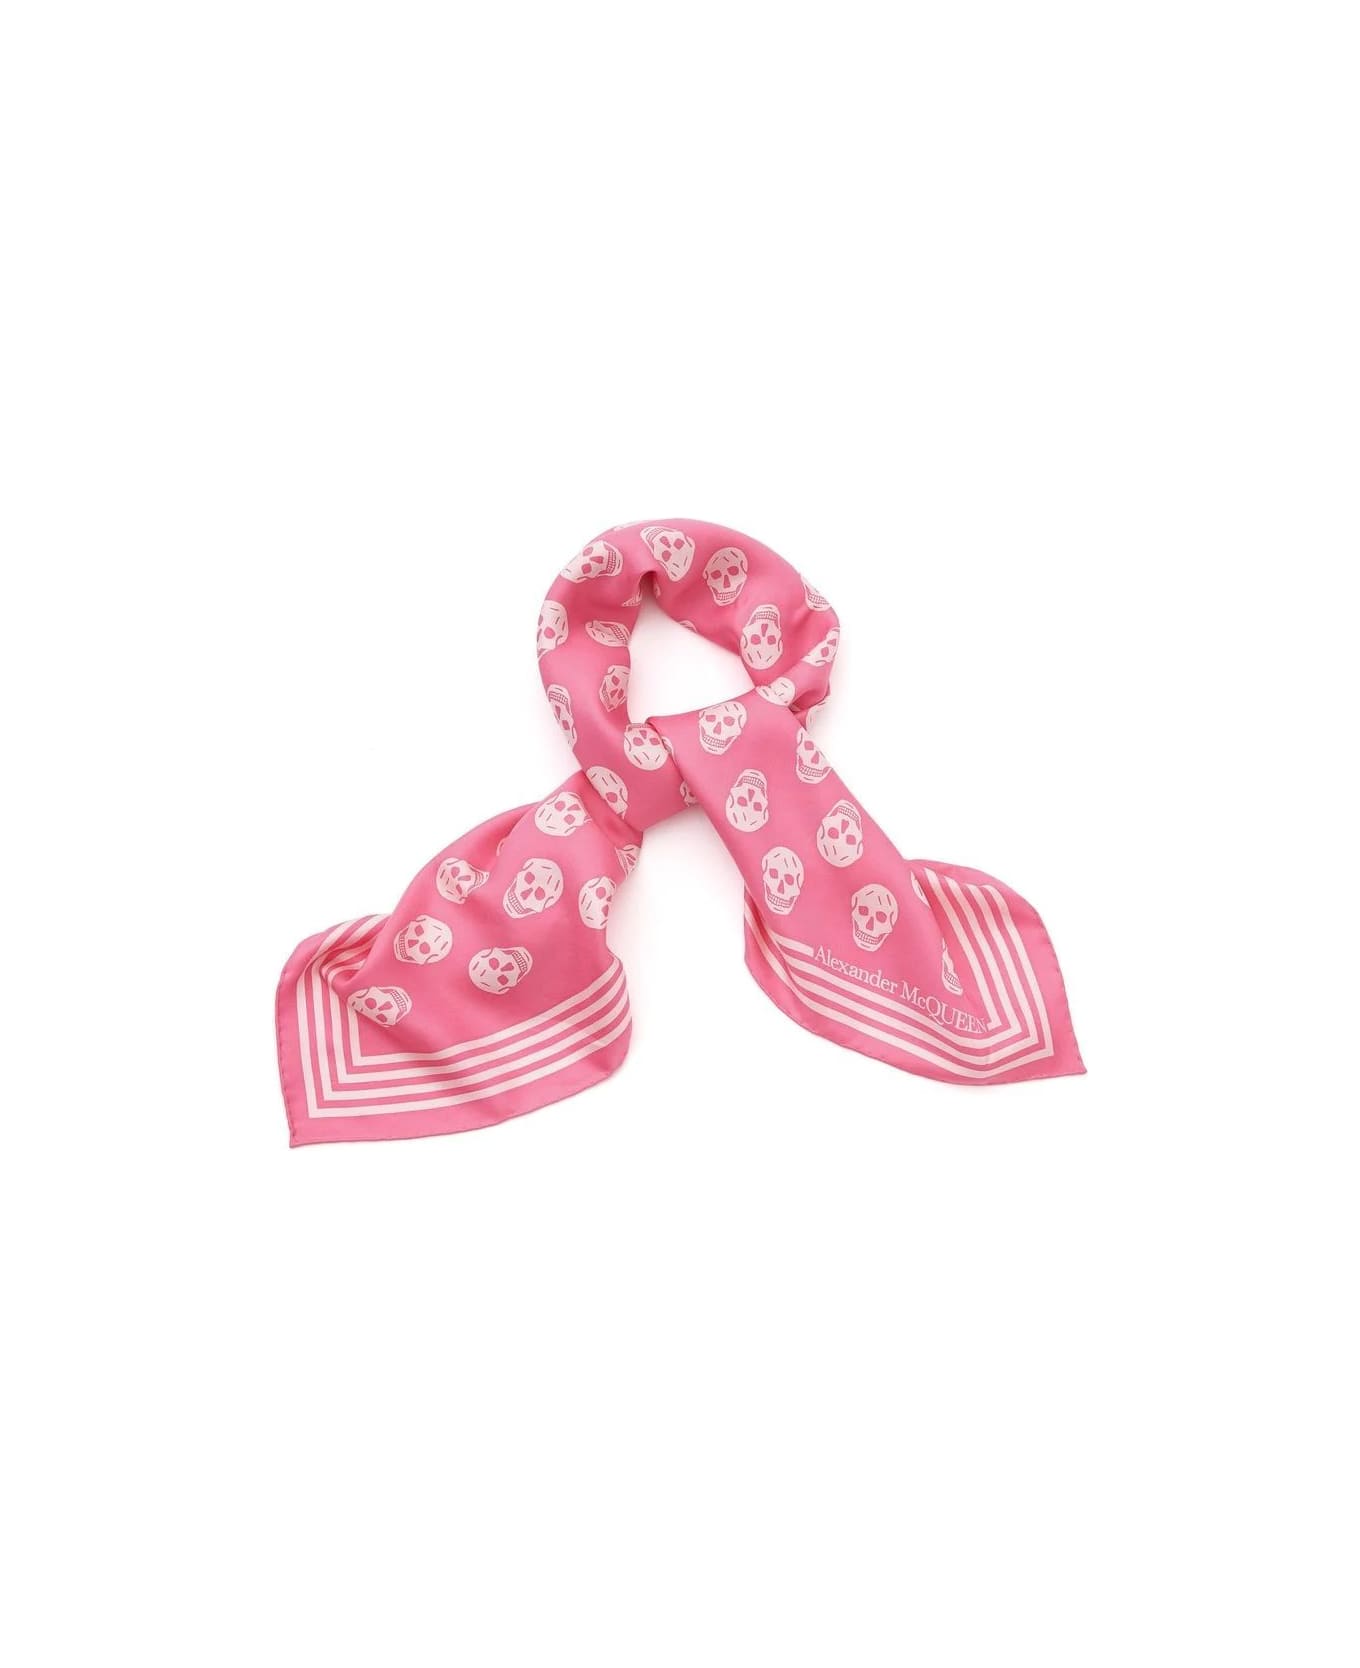 Alexander McQueen Pink Silk Scarf With Skull Pattern - Rosa スカーフ